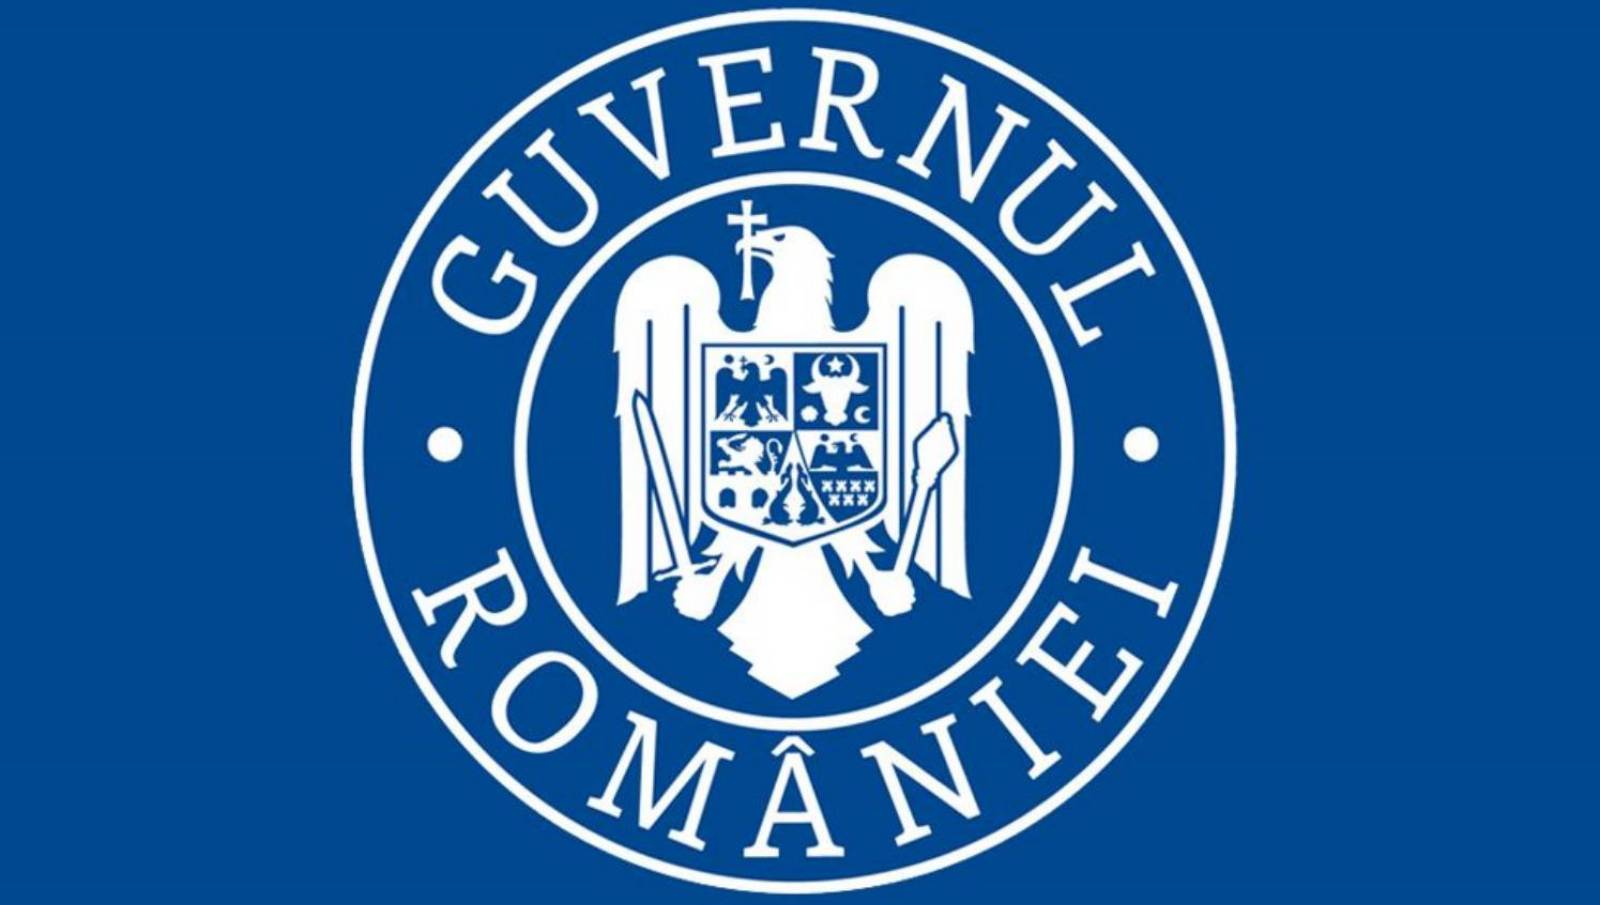 The Romanian government decided to quarantine entry into Romania